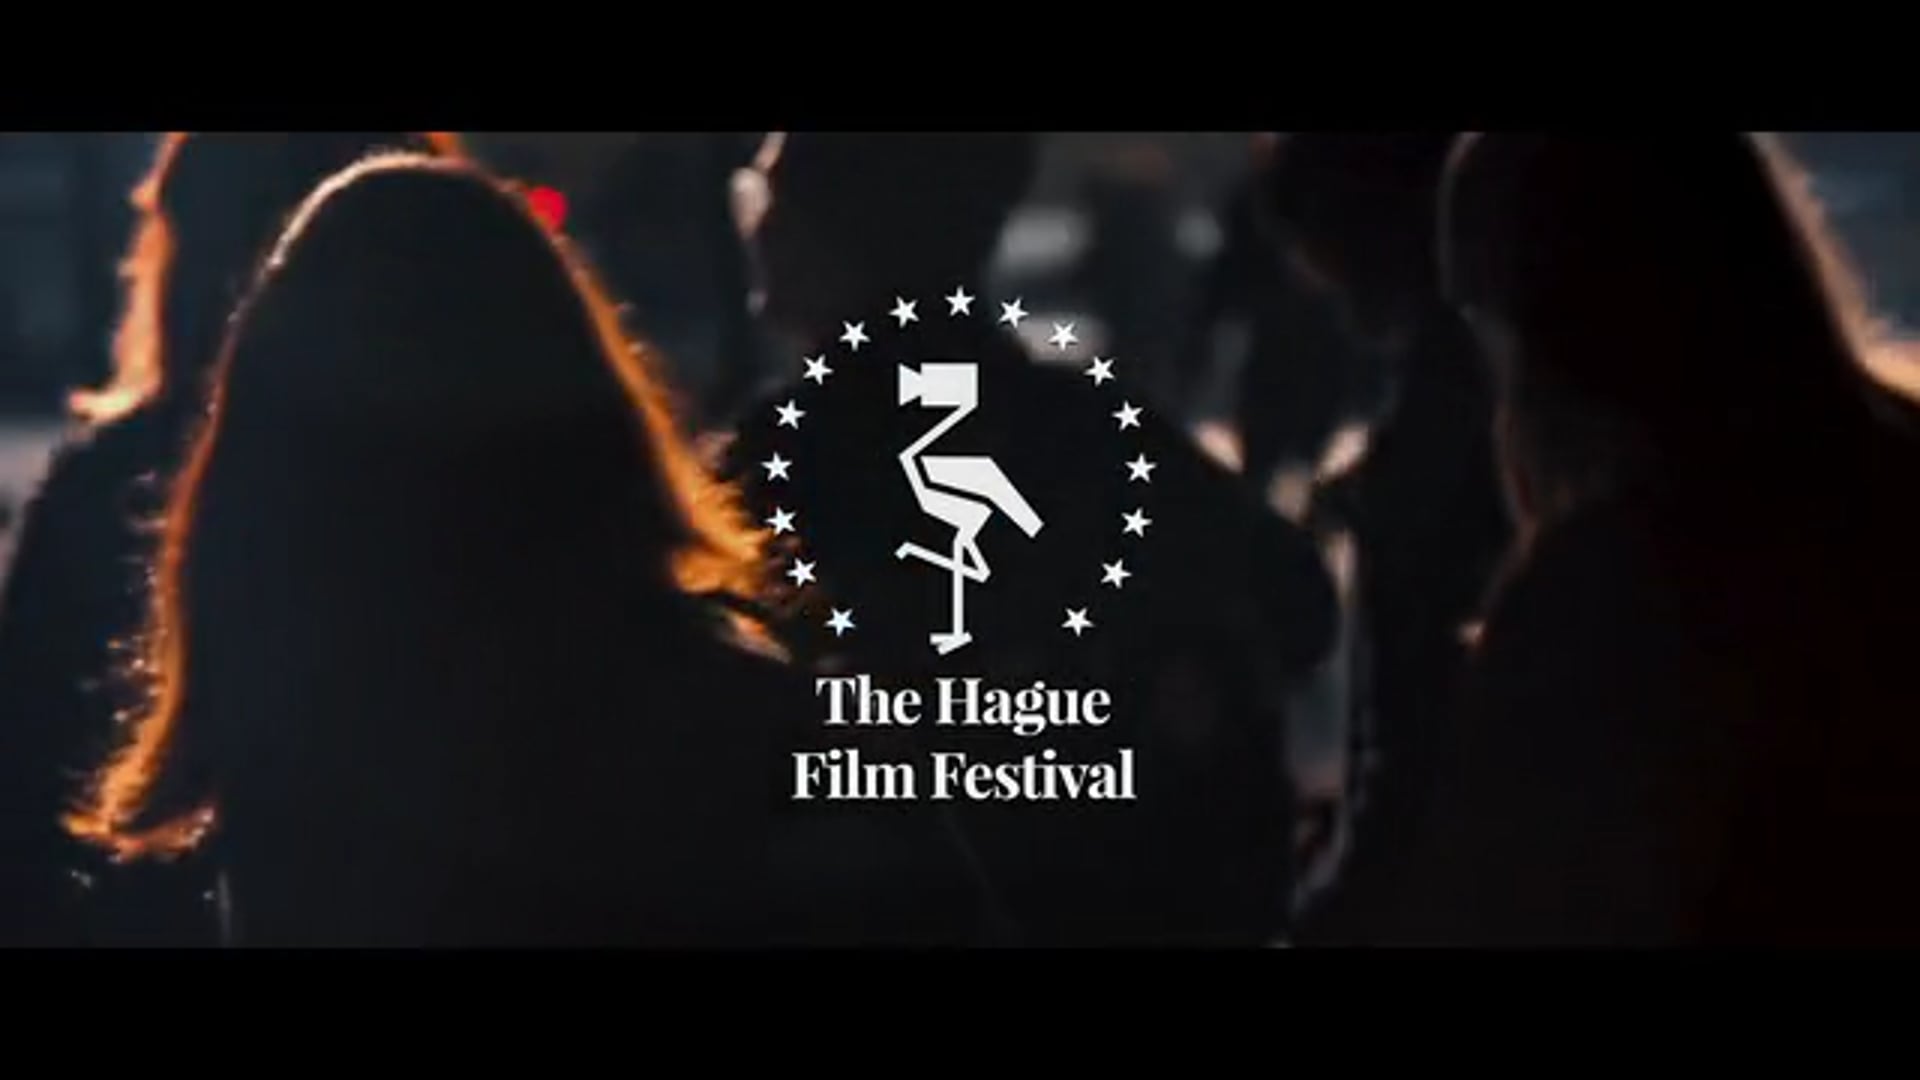 The Hague Film Festival 2021 - Teaser